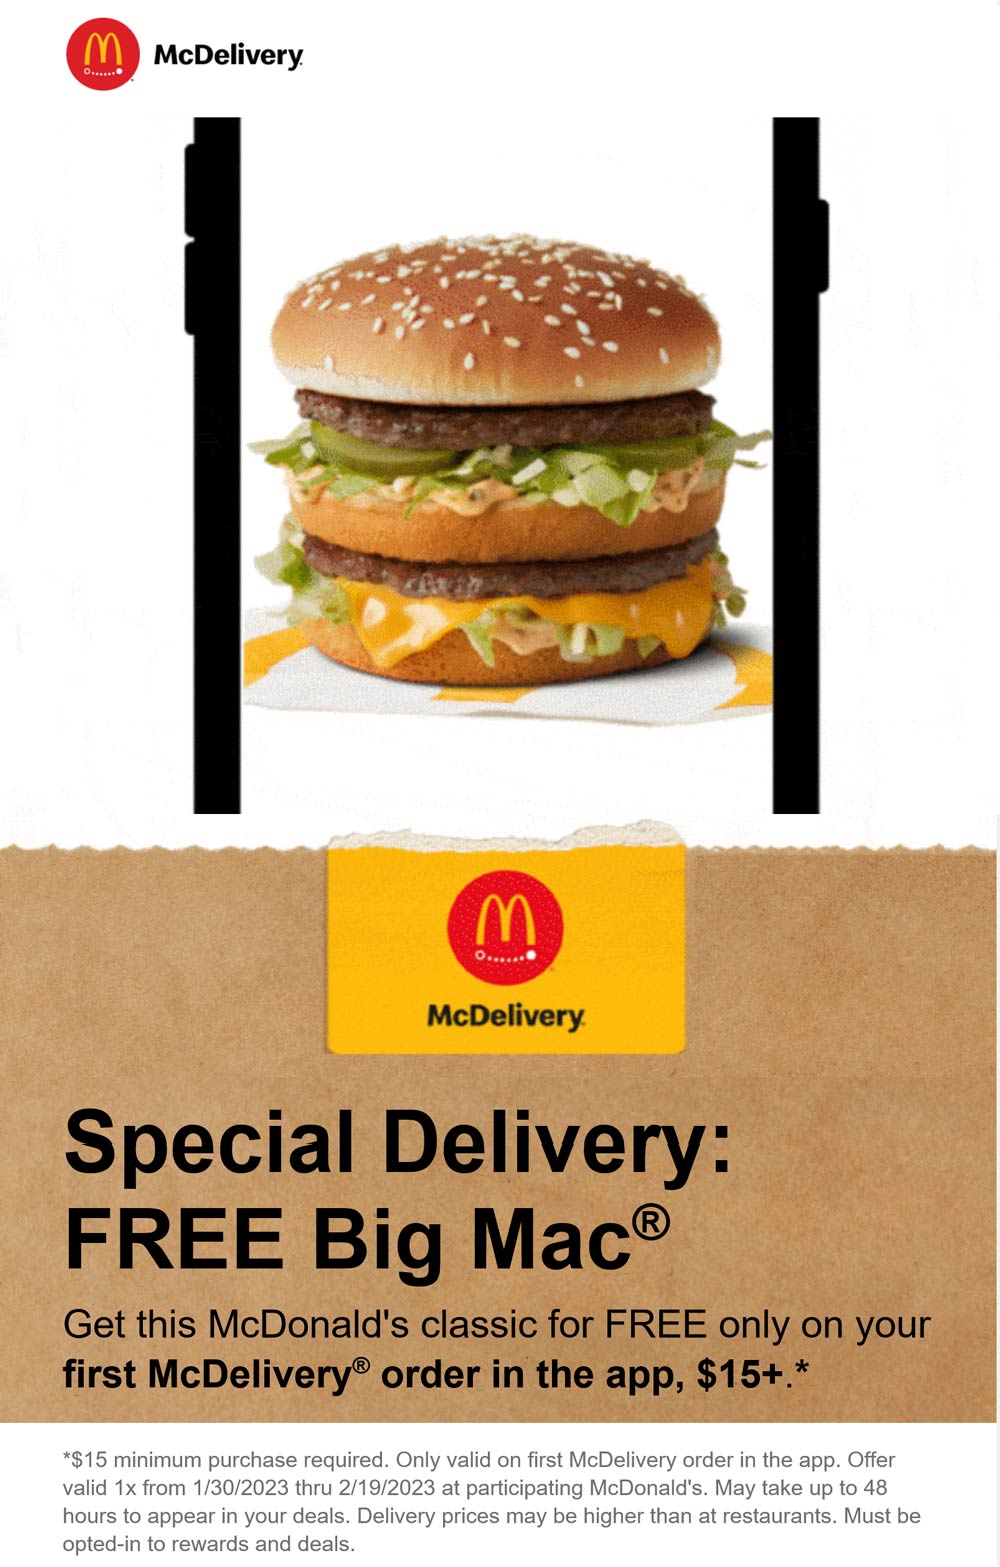 McDonalds restaurants Coupon  Free big mac via first $15 delivery at McDonalds #mcdonalds 